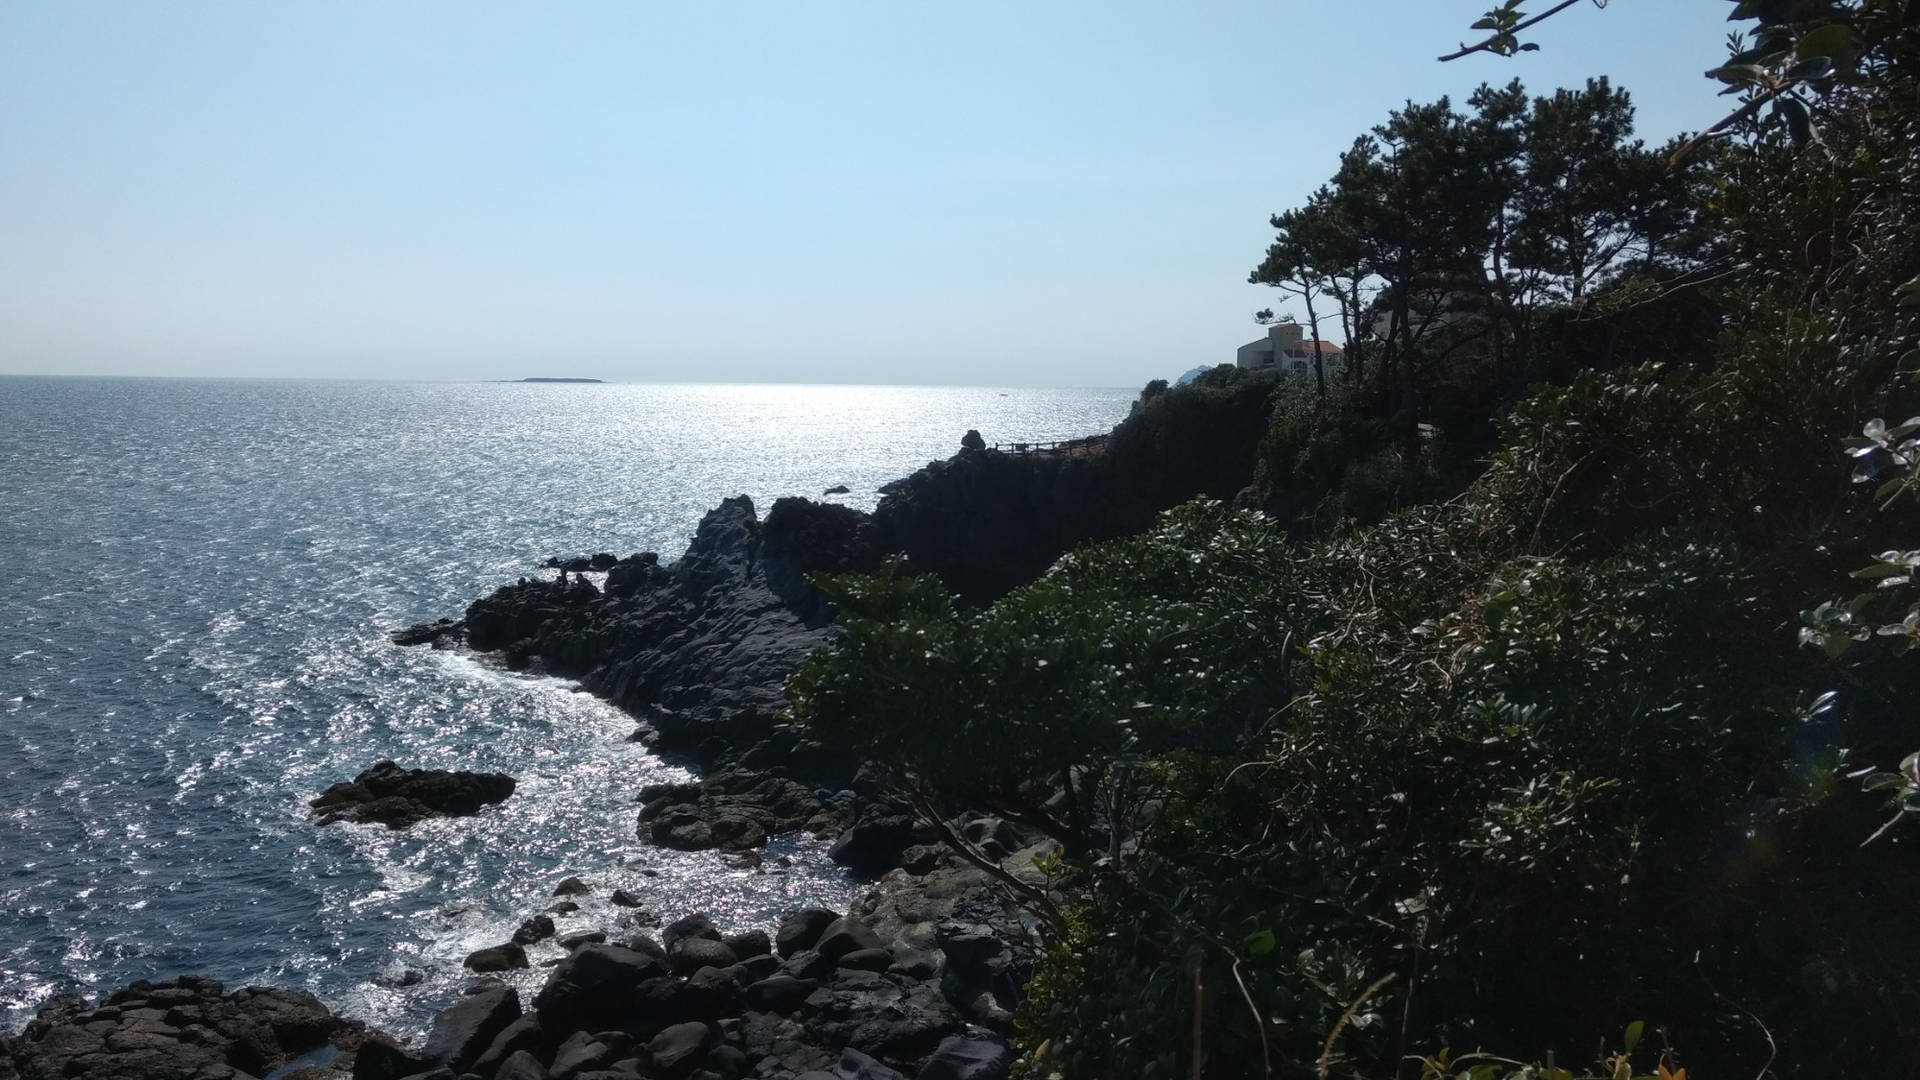 Keunongcoastal Promenade Jeju Island Would Be Translated To 